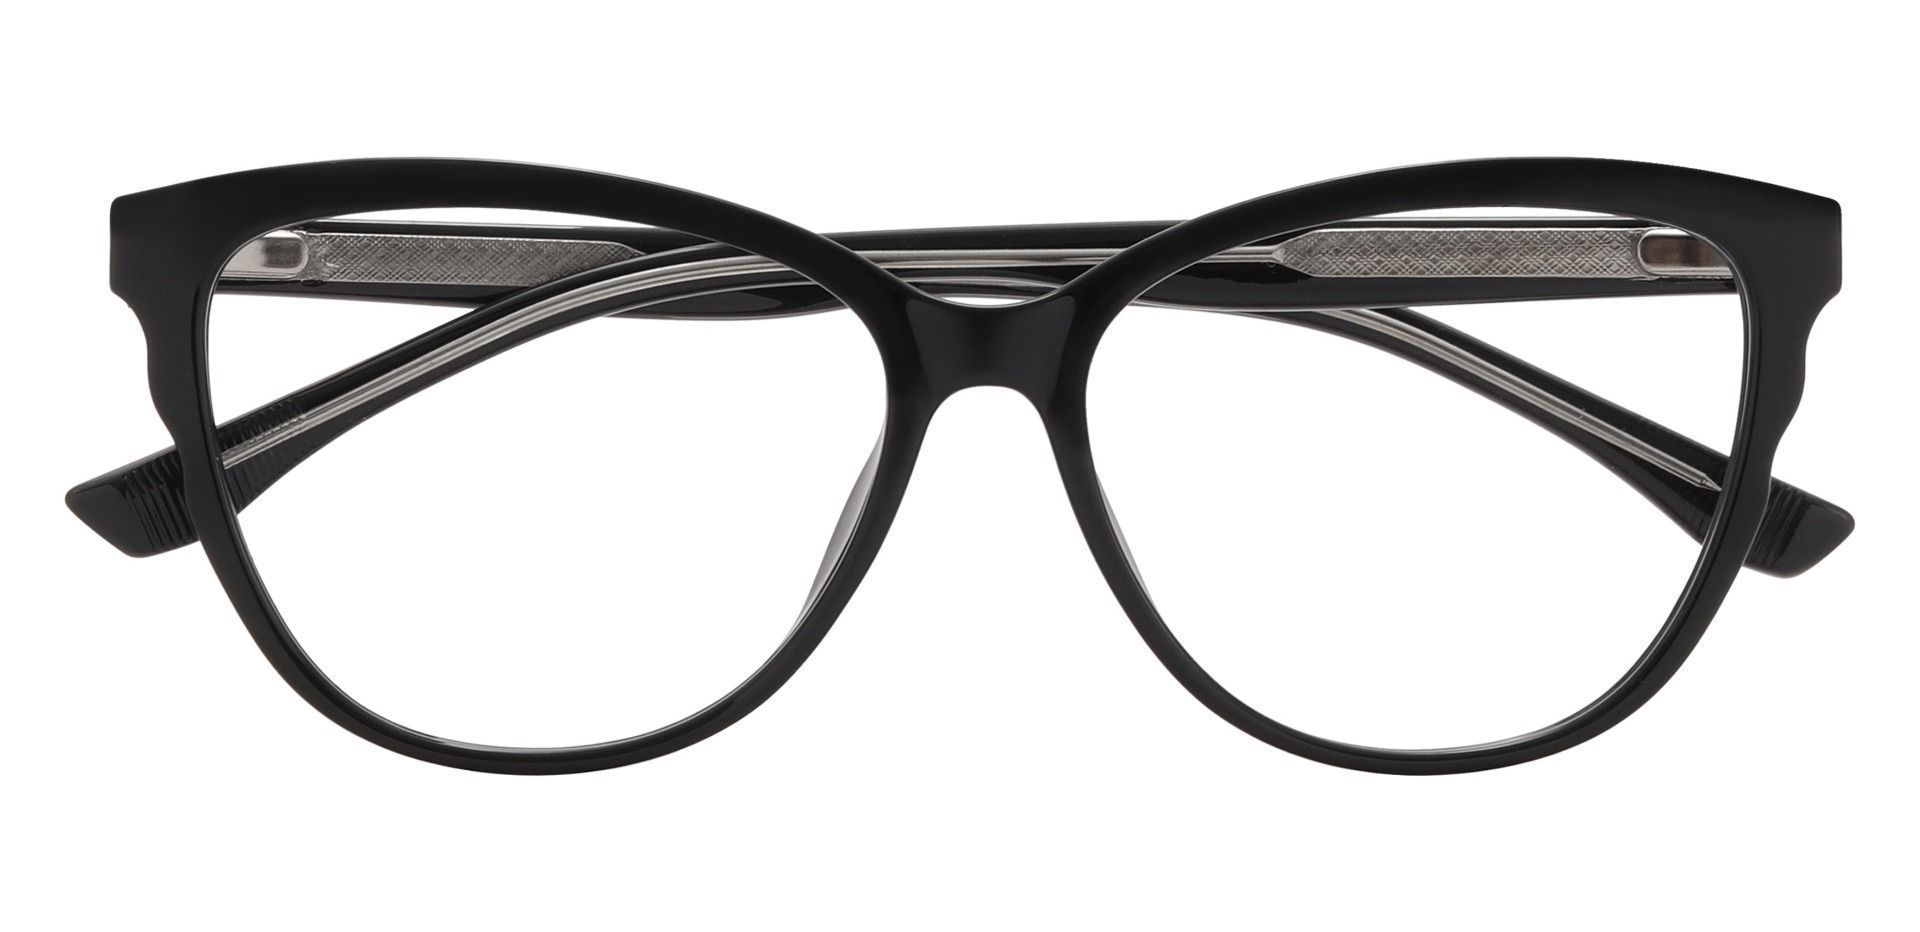 Chloe Cat Eye Prescription Glasses - Black